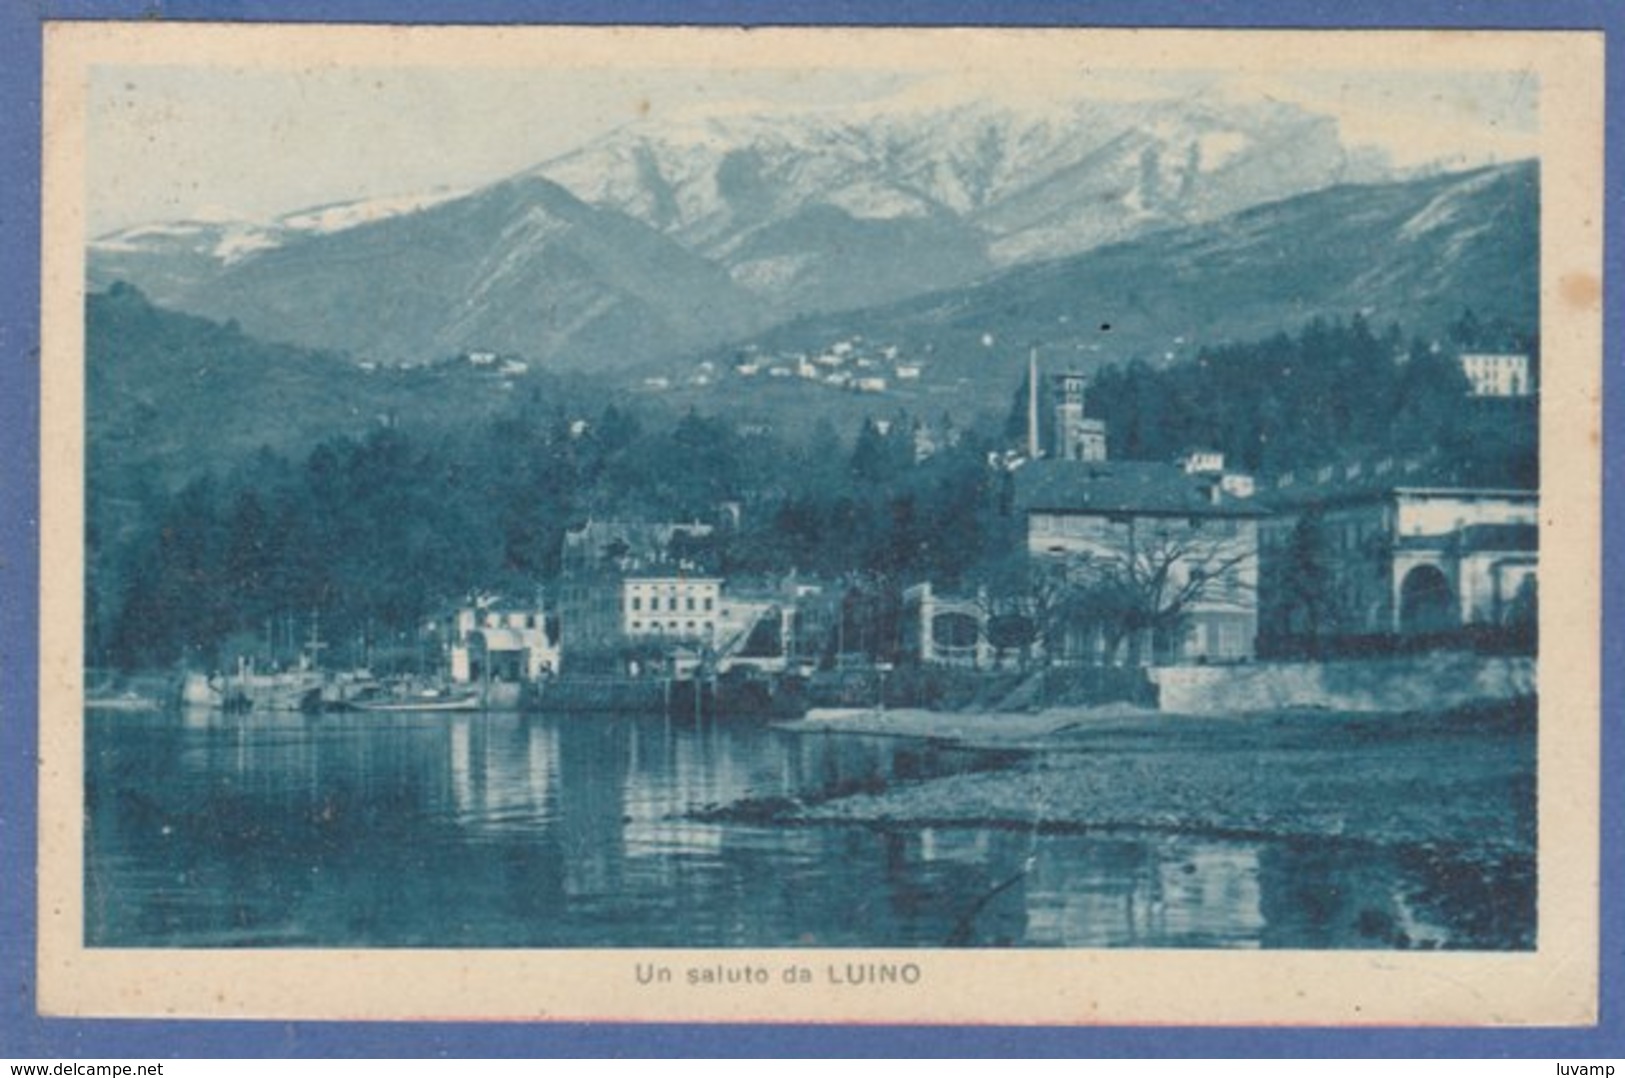 LUINO (Varese)  -F/P   Azzurra (170609) - Luino